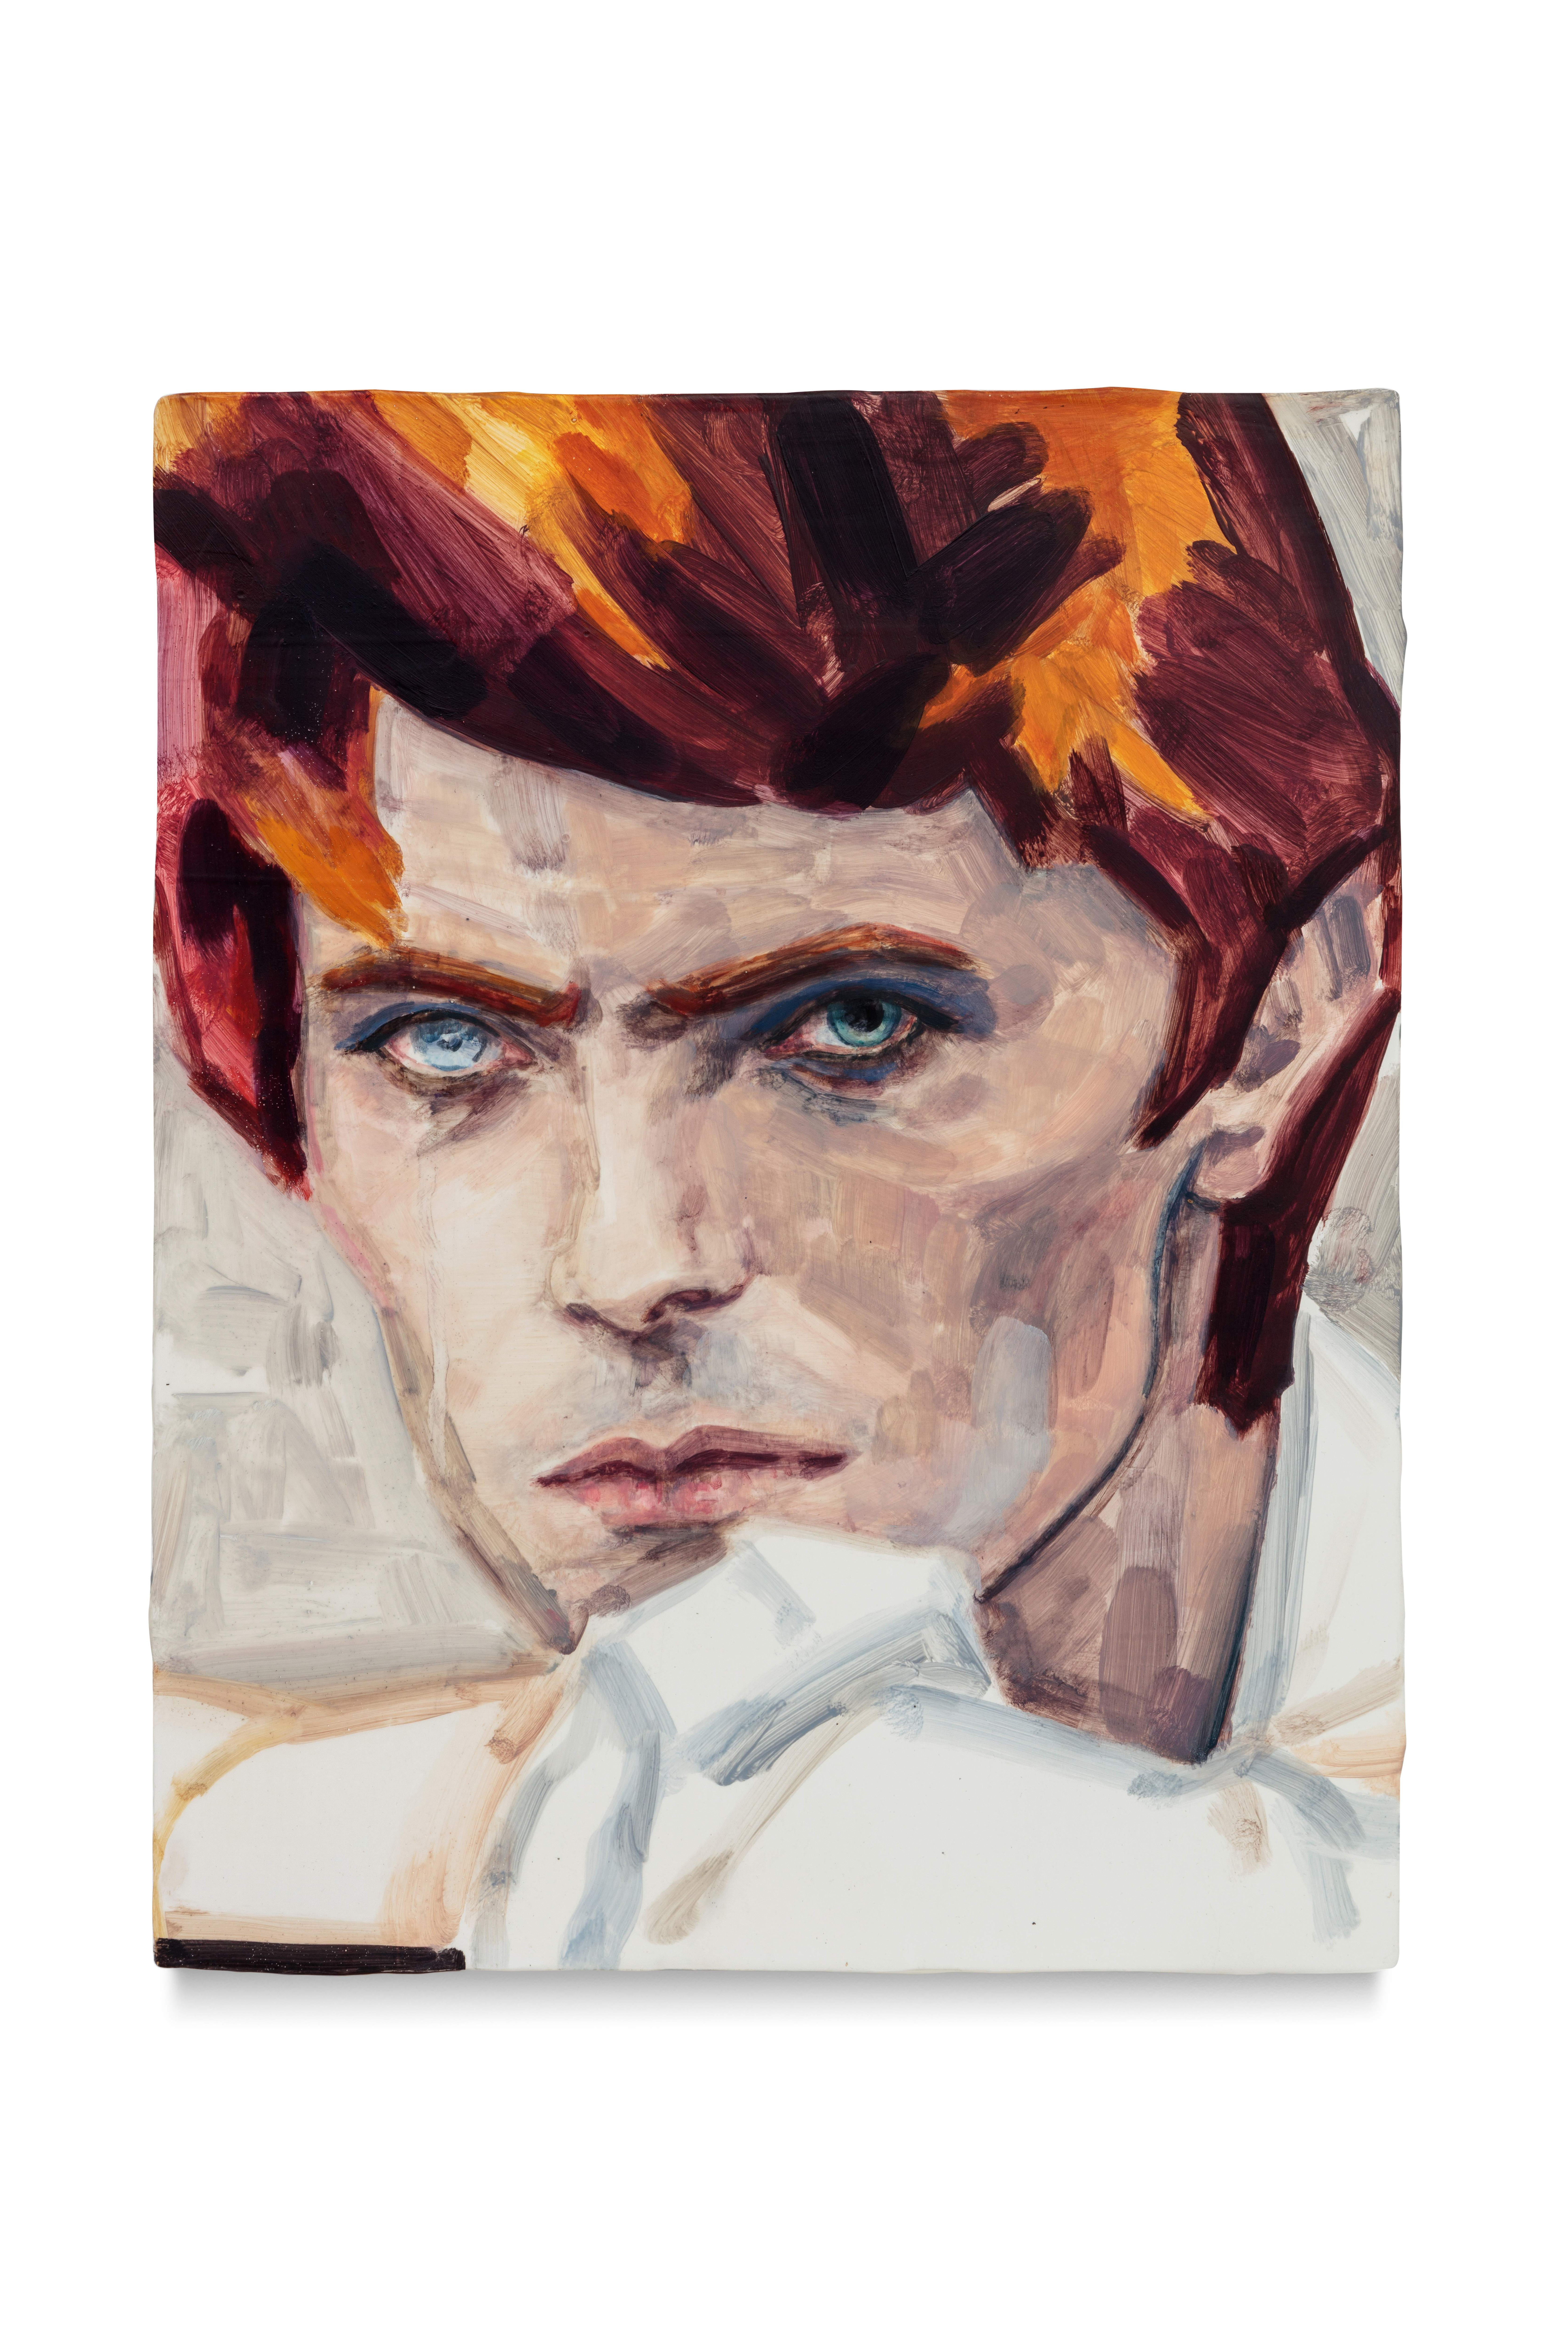 Who Bought Elizabeth Peyton's $2.1 Million David Bowie Portrait at 